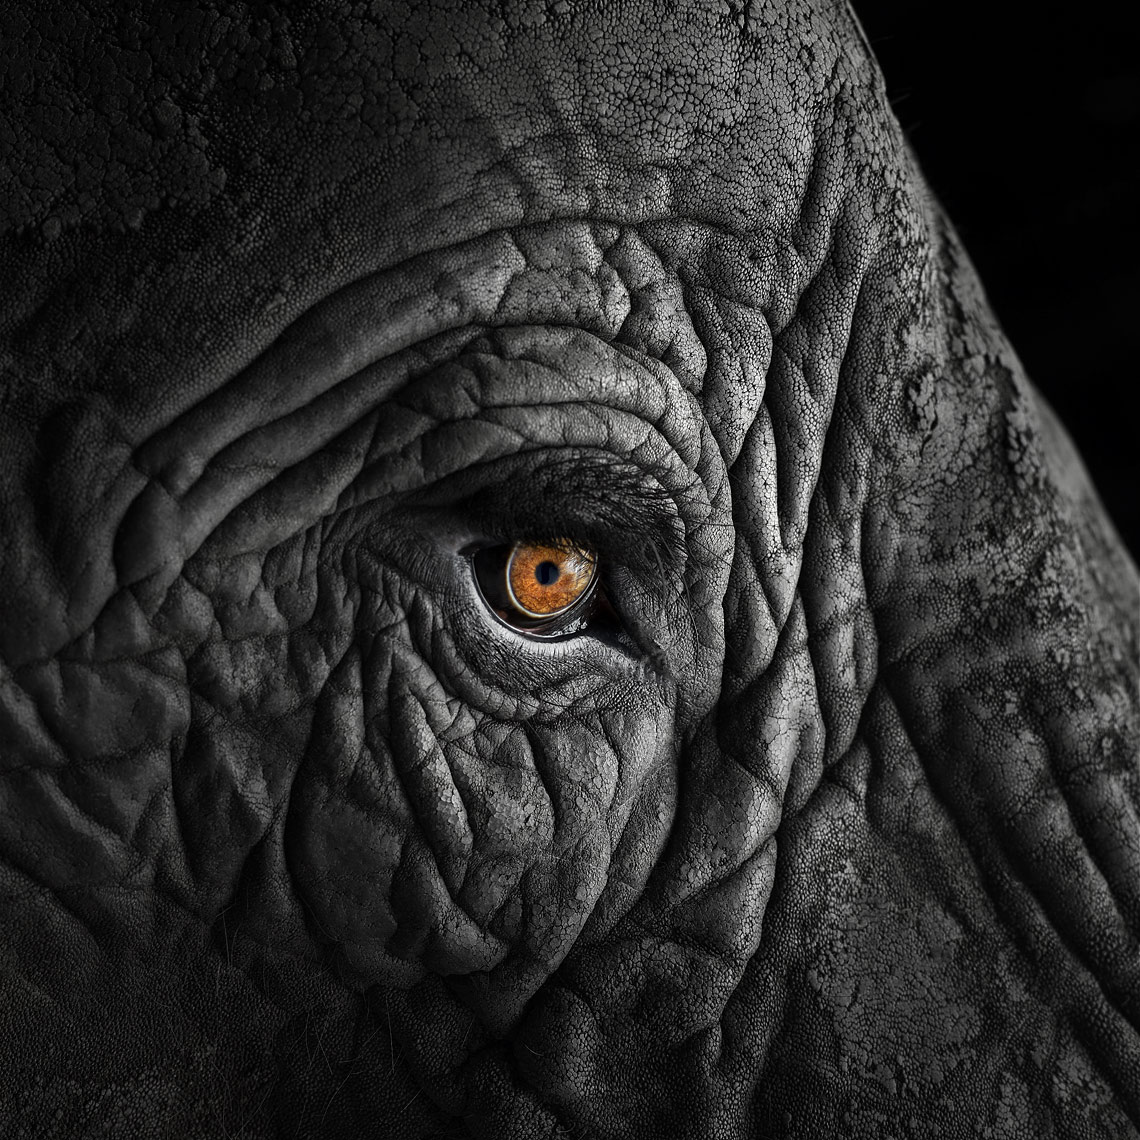 African elephant close up portrait by animal photographer Brad Wilson